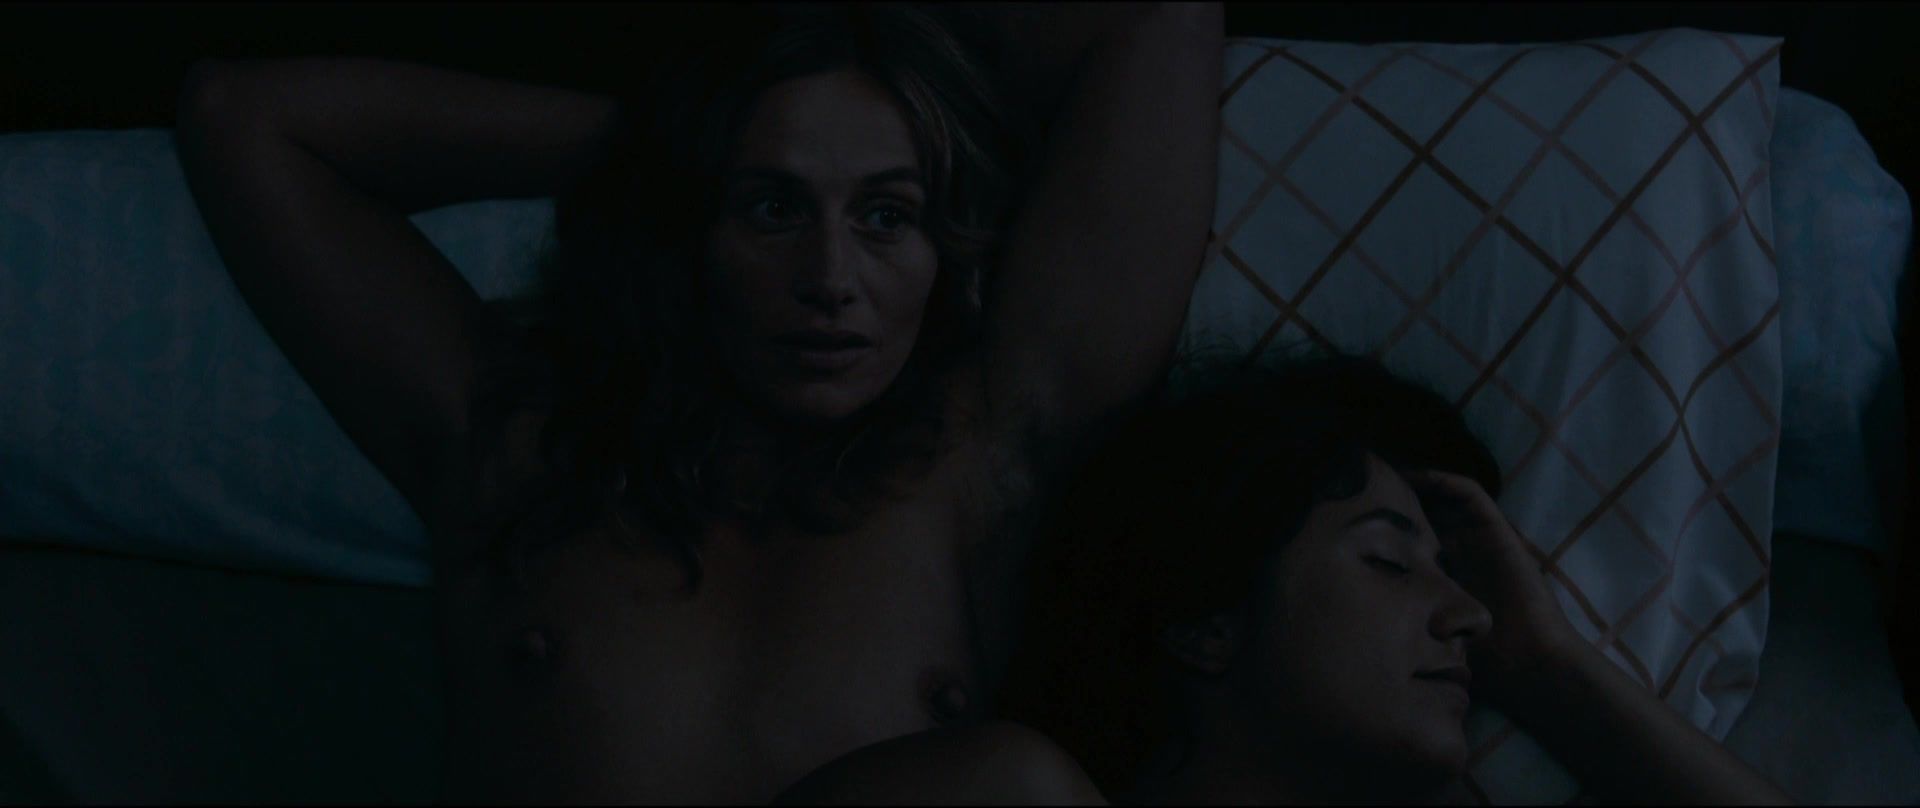 SpankBang Outdoors Lesbian Sex Video of French erotic film "La belle saison" JavPortal